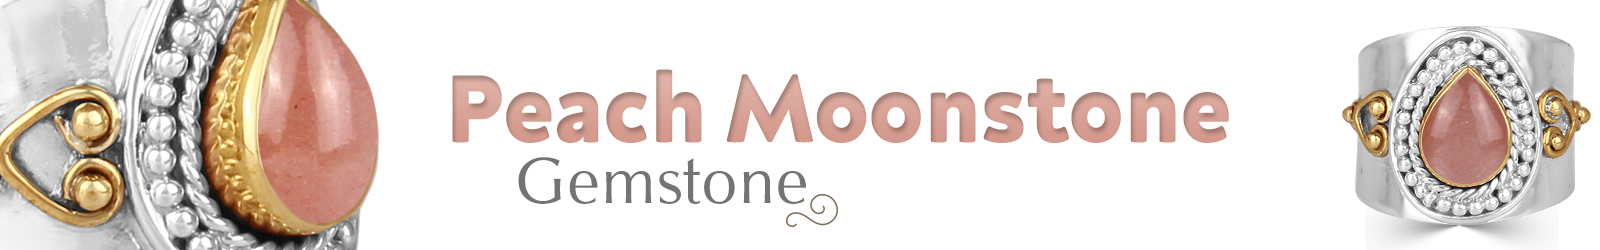 Buy peach moonstone gemstone jewelry at cheap price